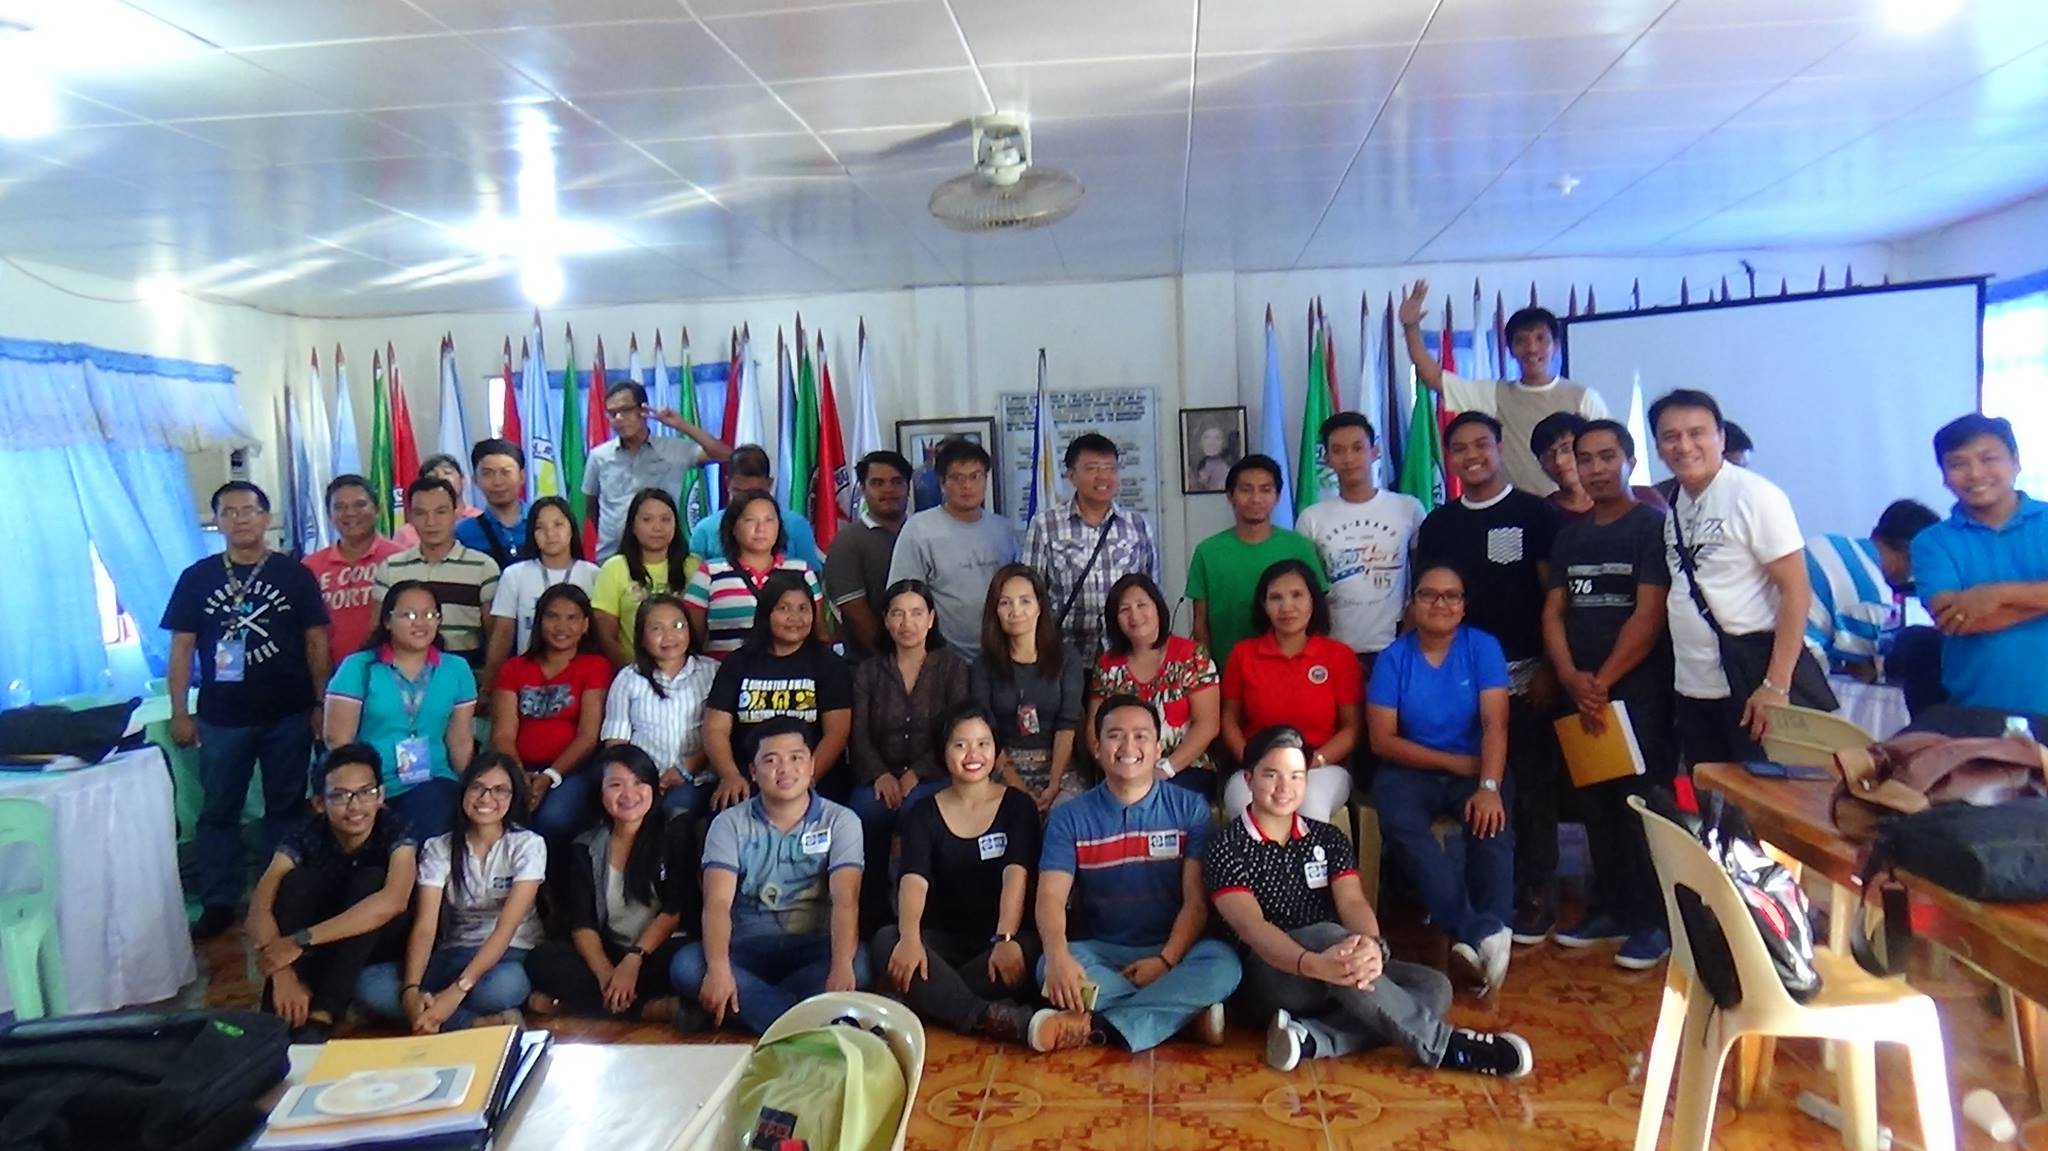 LGU Ilocos Norte with the “dream team.” We’re the ones sitting on the floor